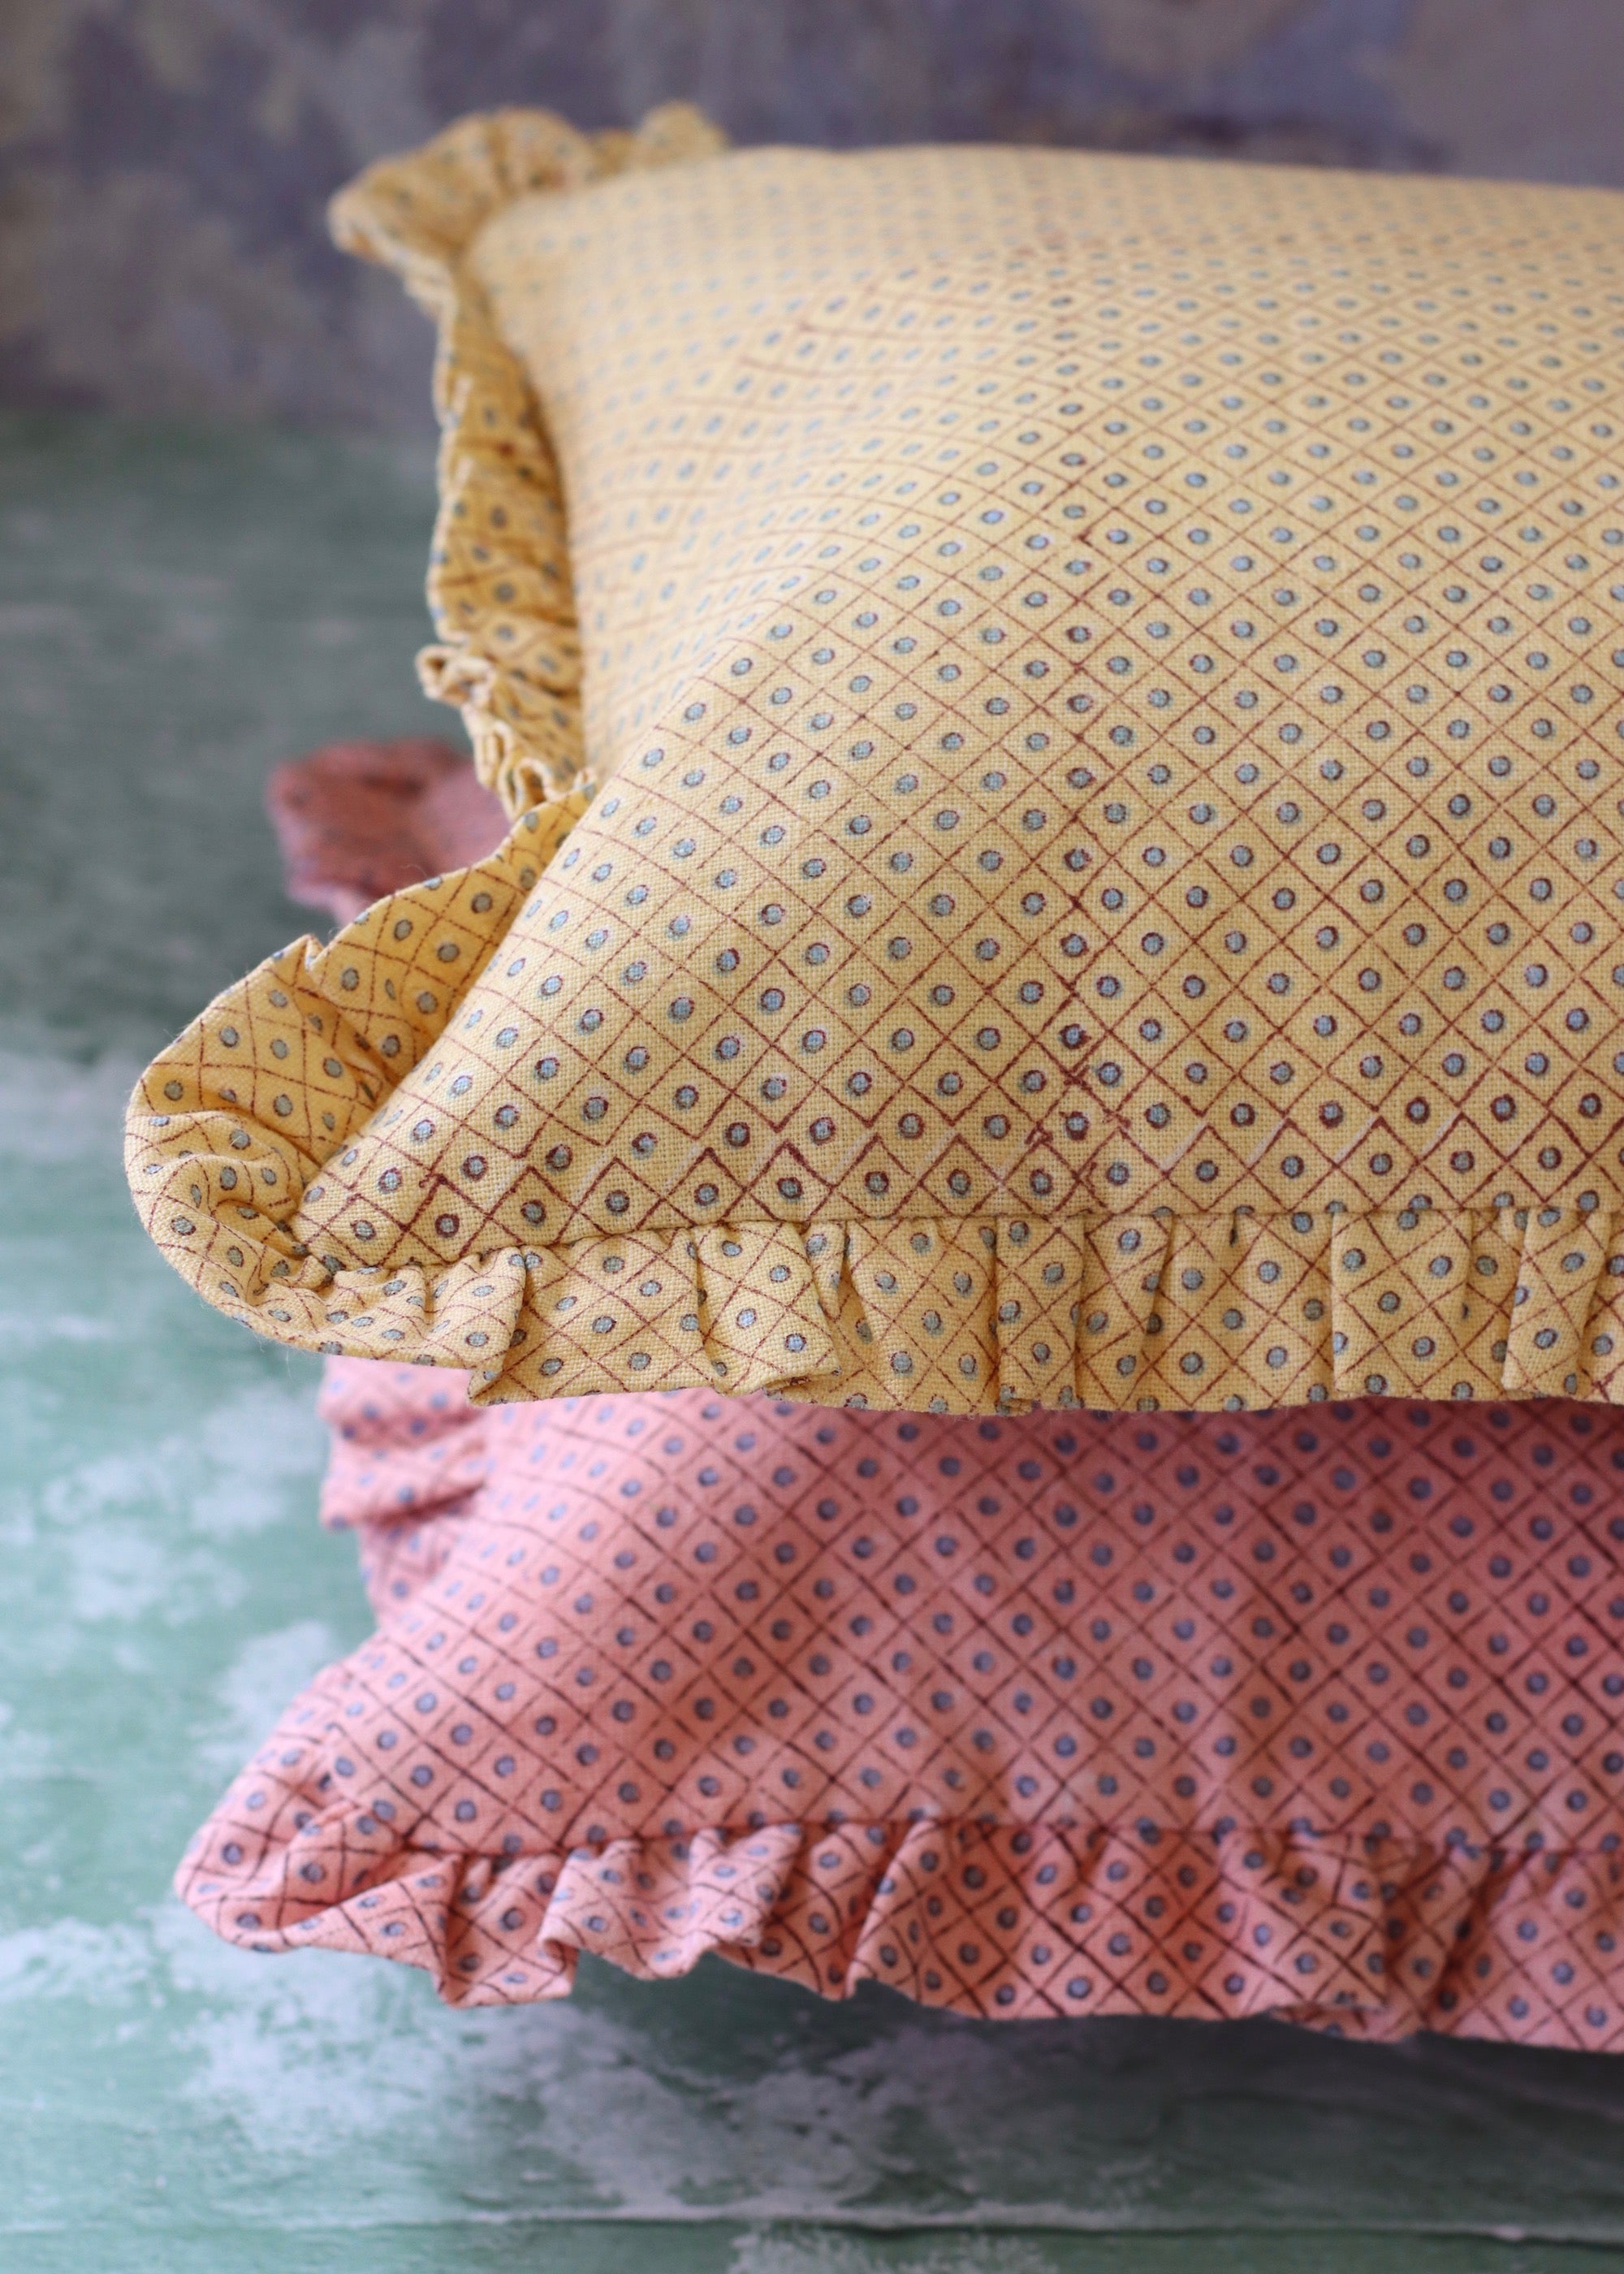 Ruffled Edge Linen Cushion - Golden Yellow